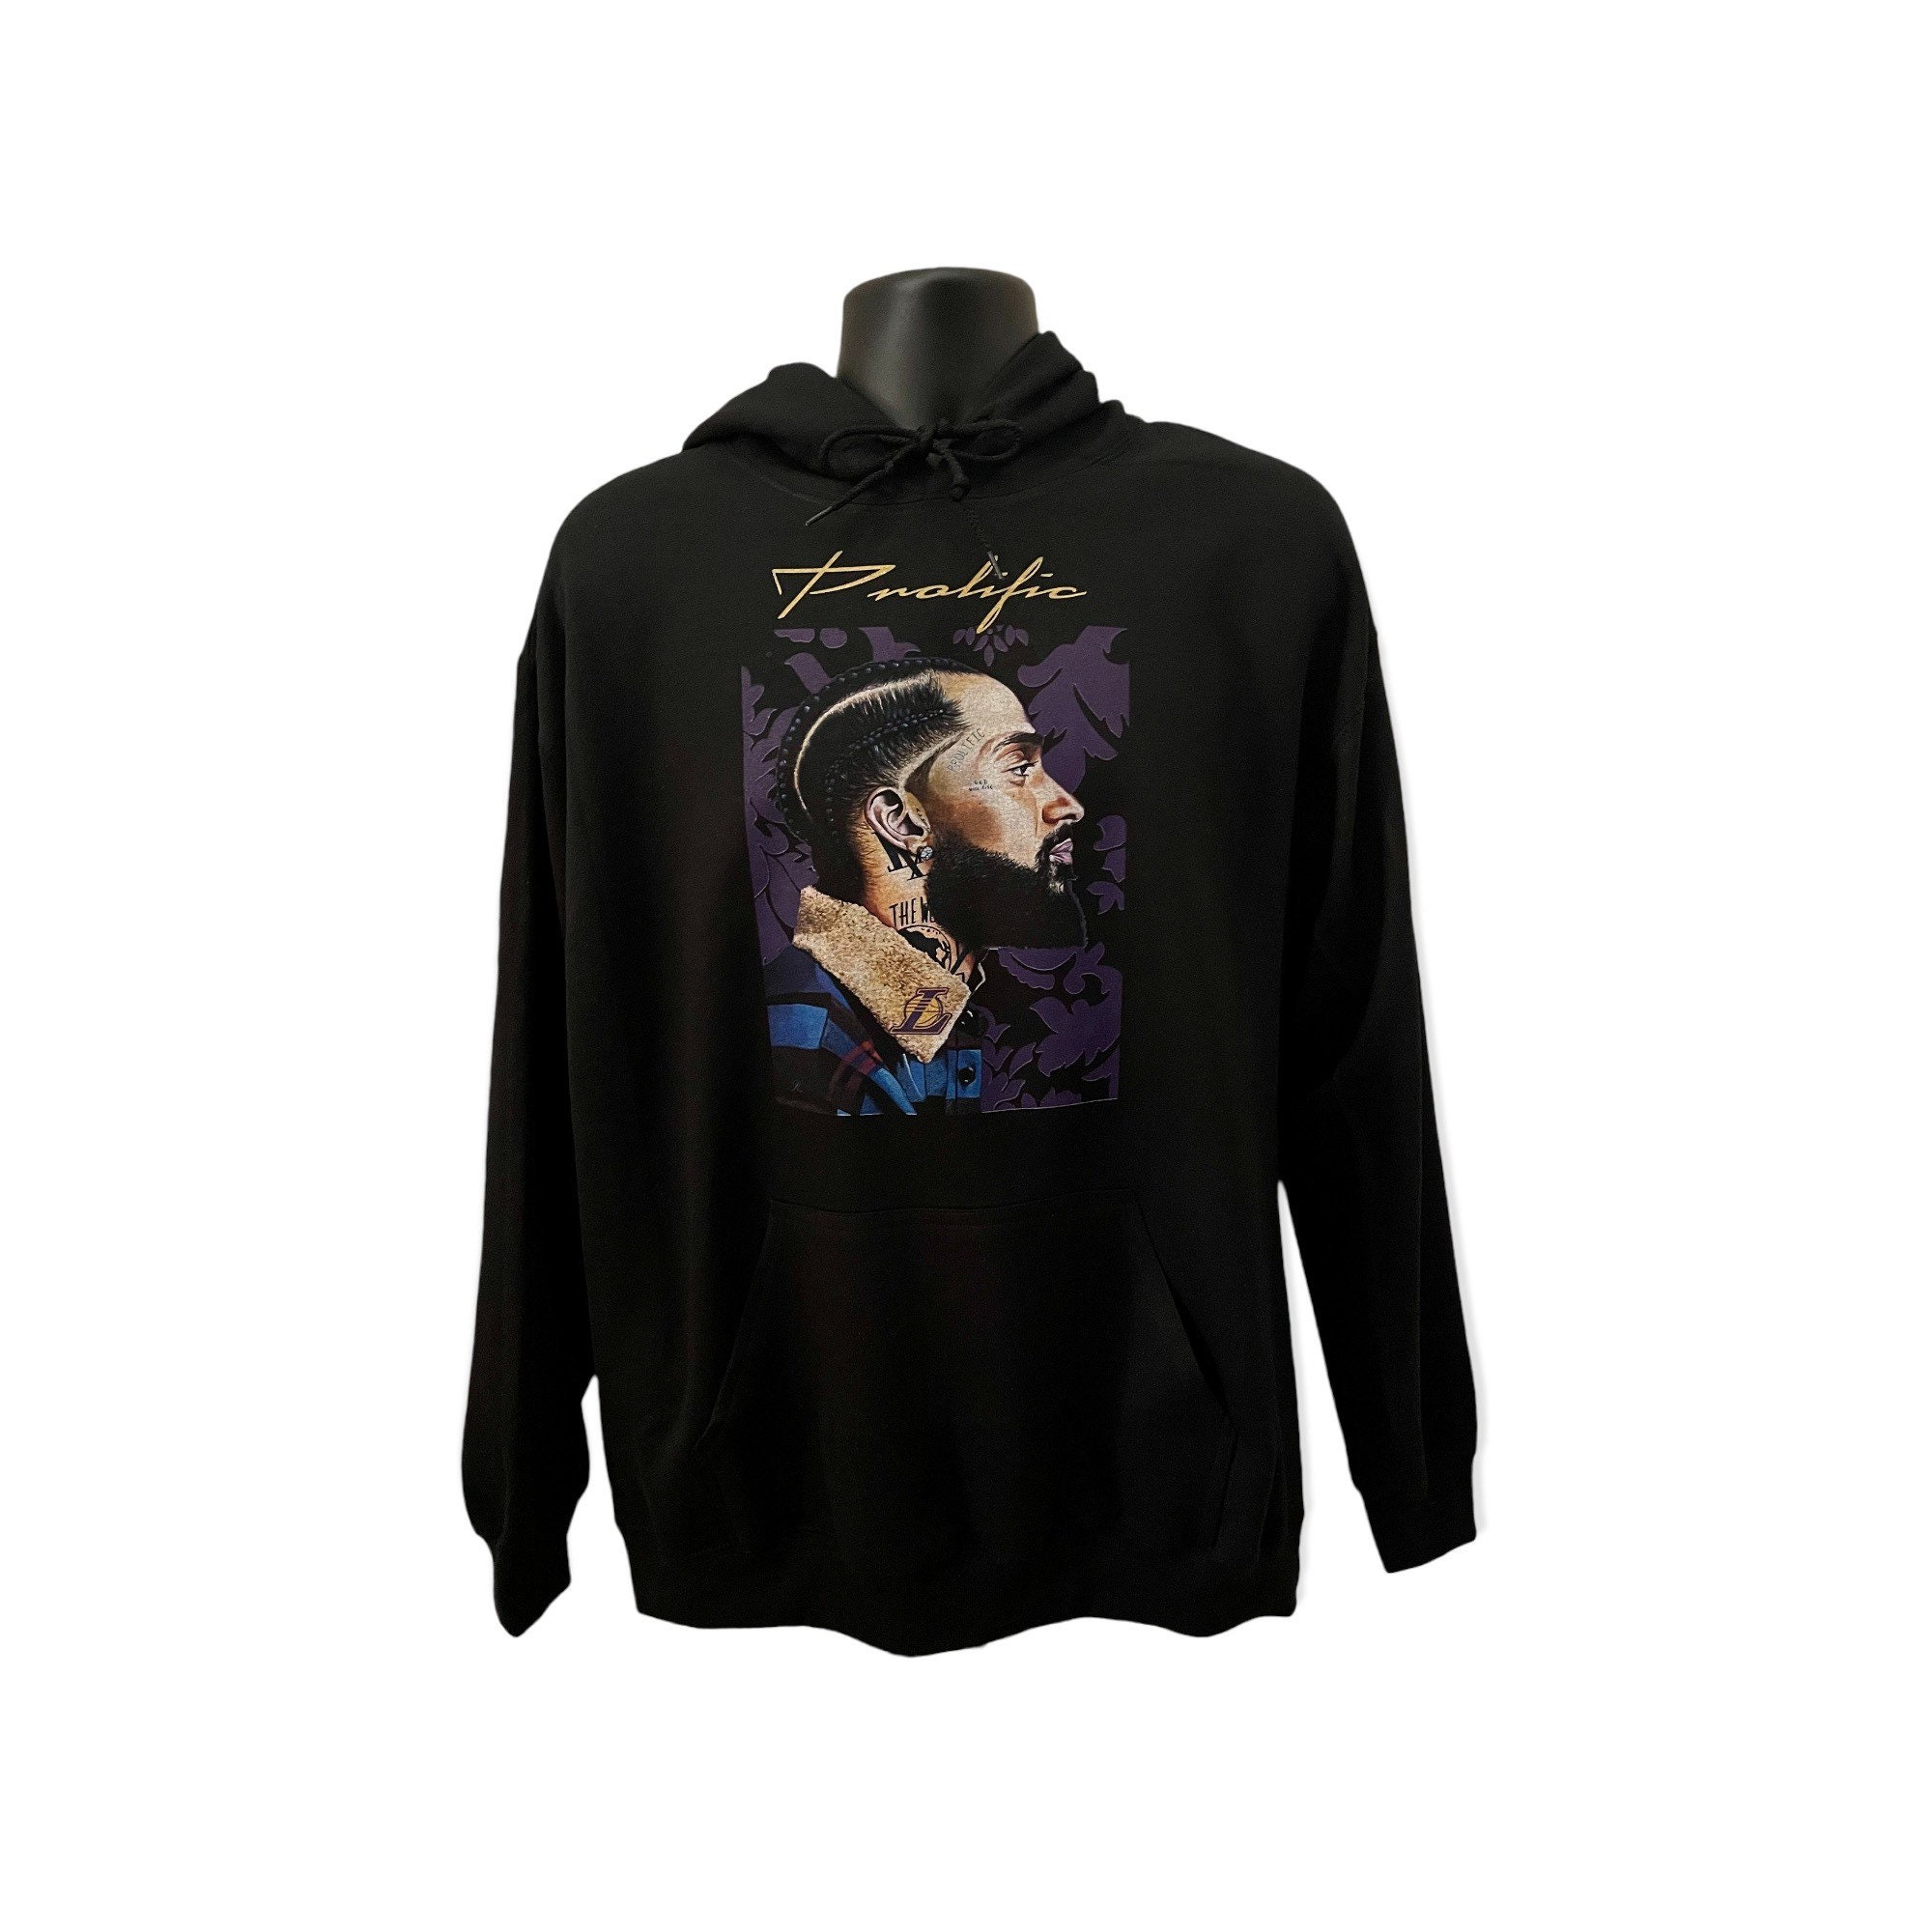 Kobe Bryant Black Mamba digital airbrush vintage shirt, hoodie, sweater,  long sleeve and tank top